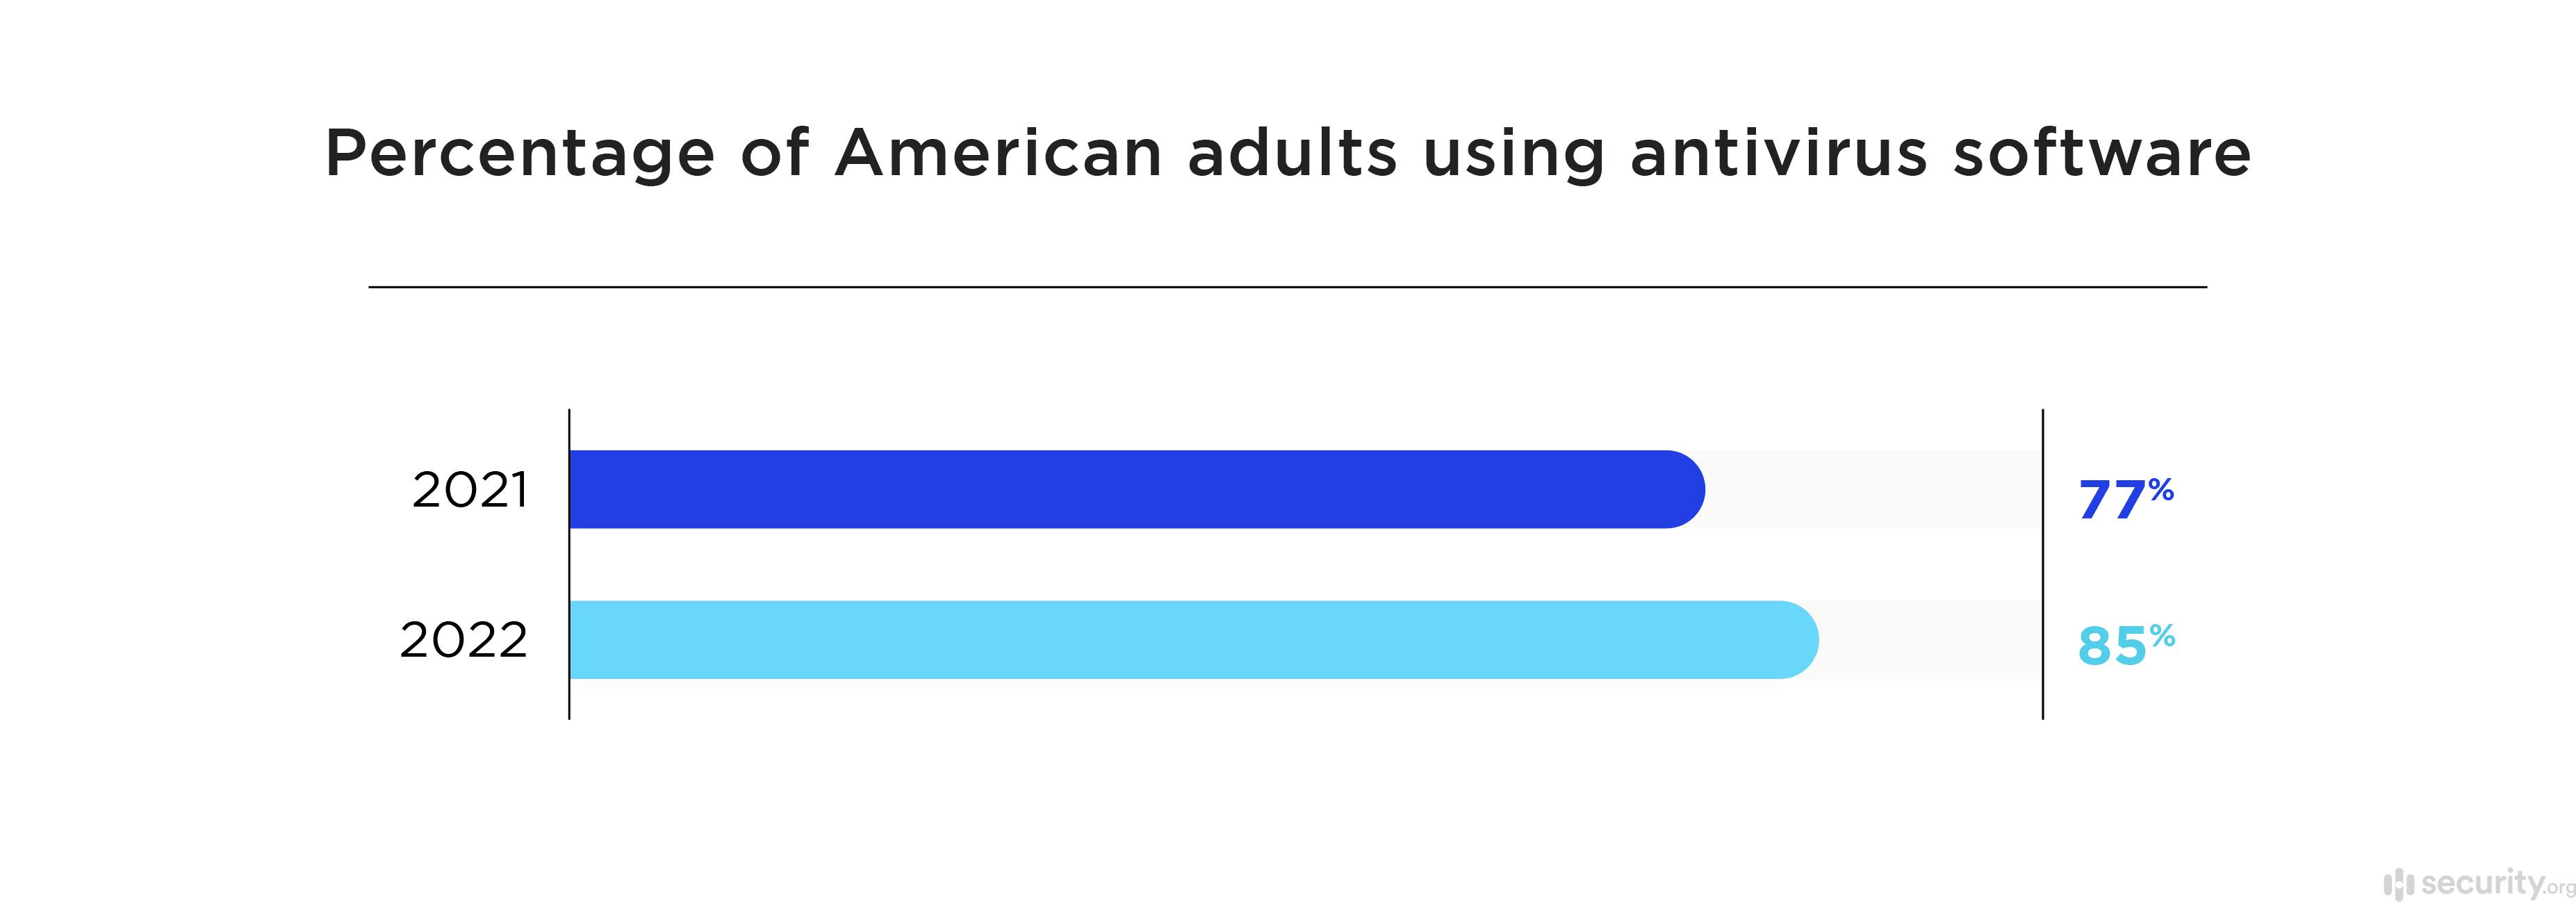 Percentage of American adults using antivirus software